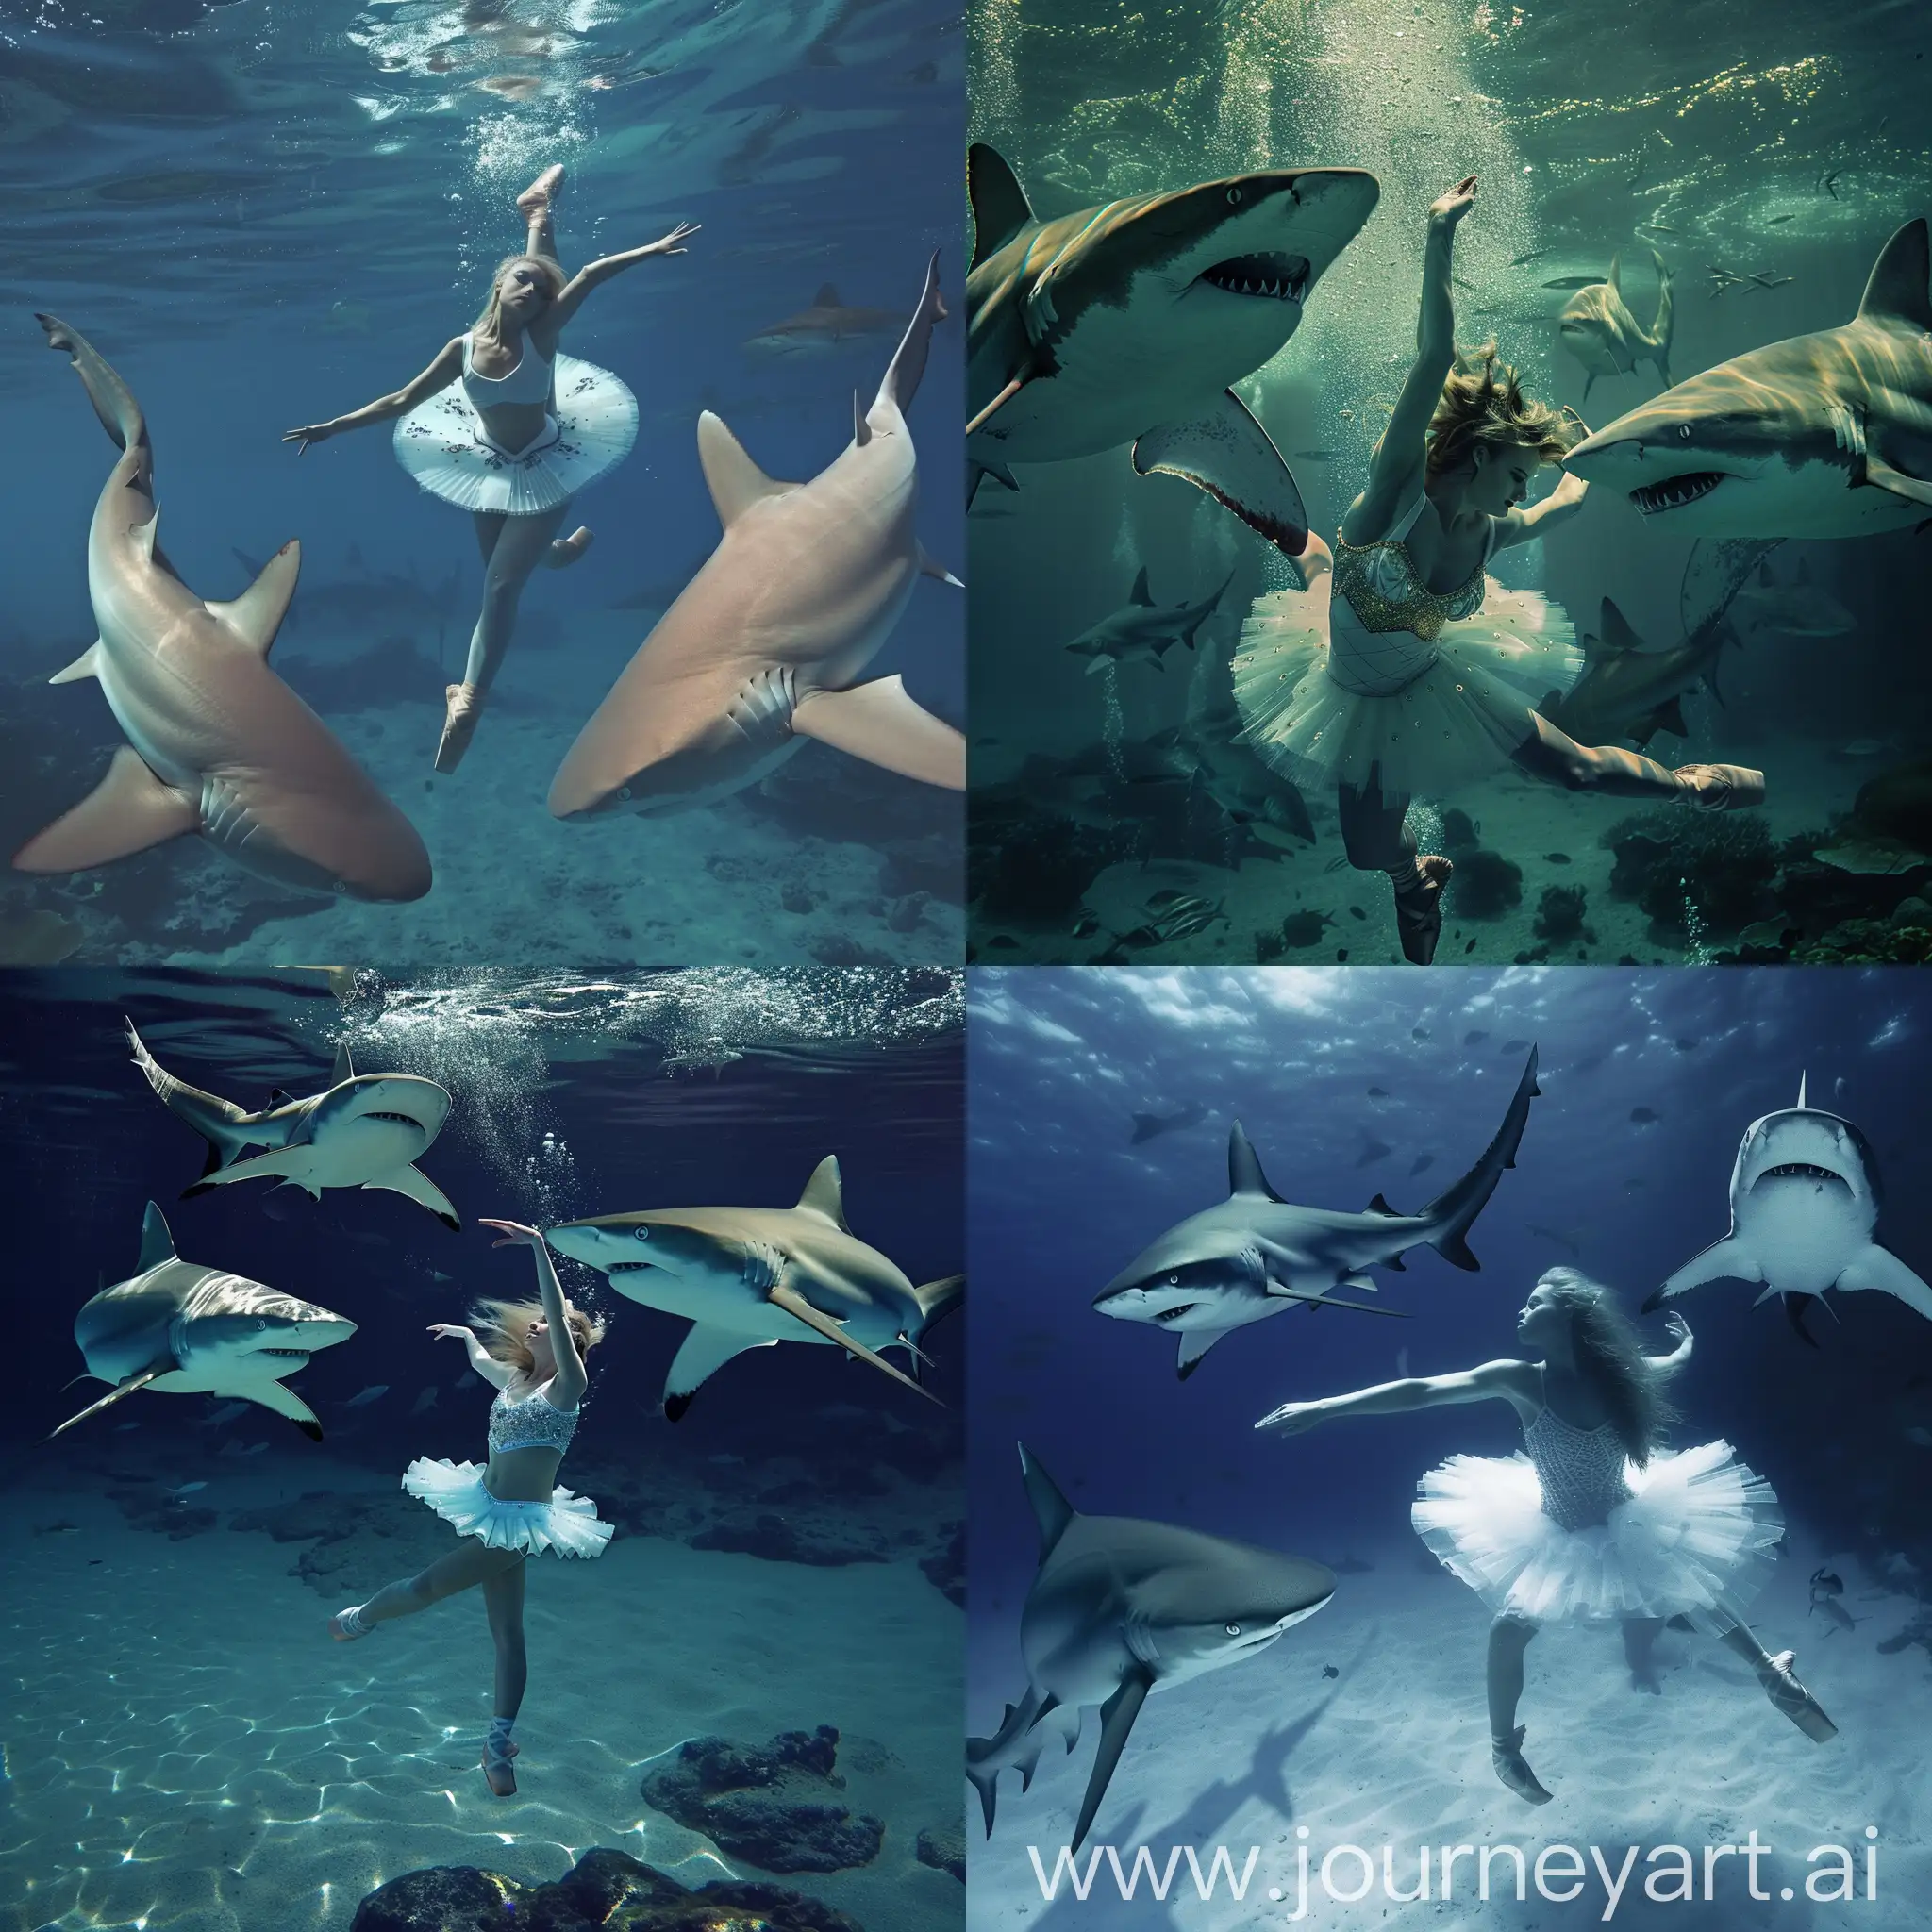 Graceful-Ballet-Dance-Underwater-Amidst-Majestic-Sharks